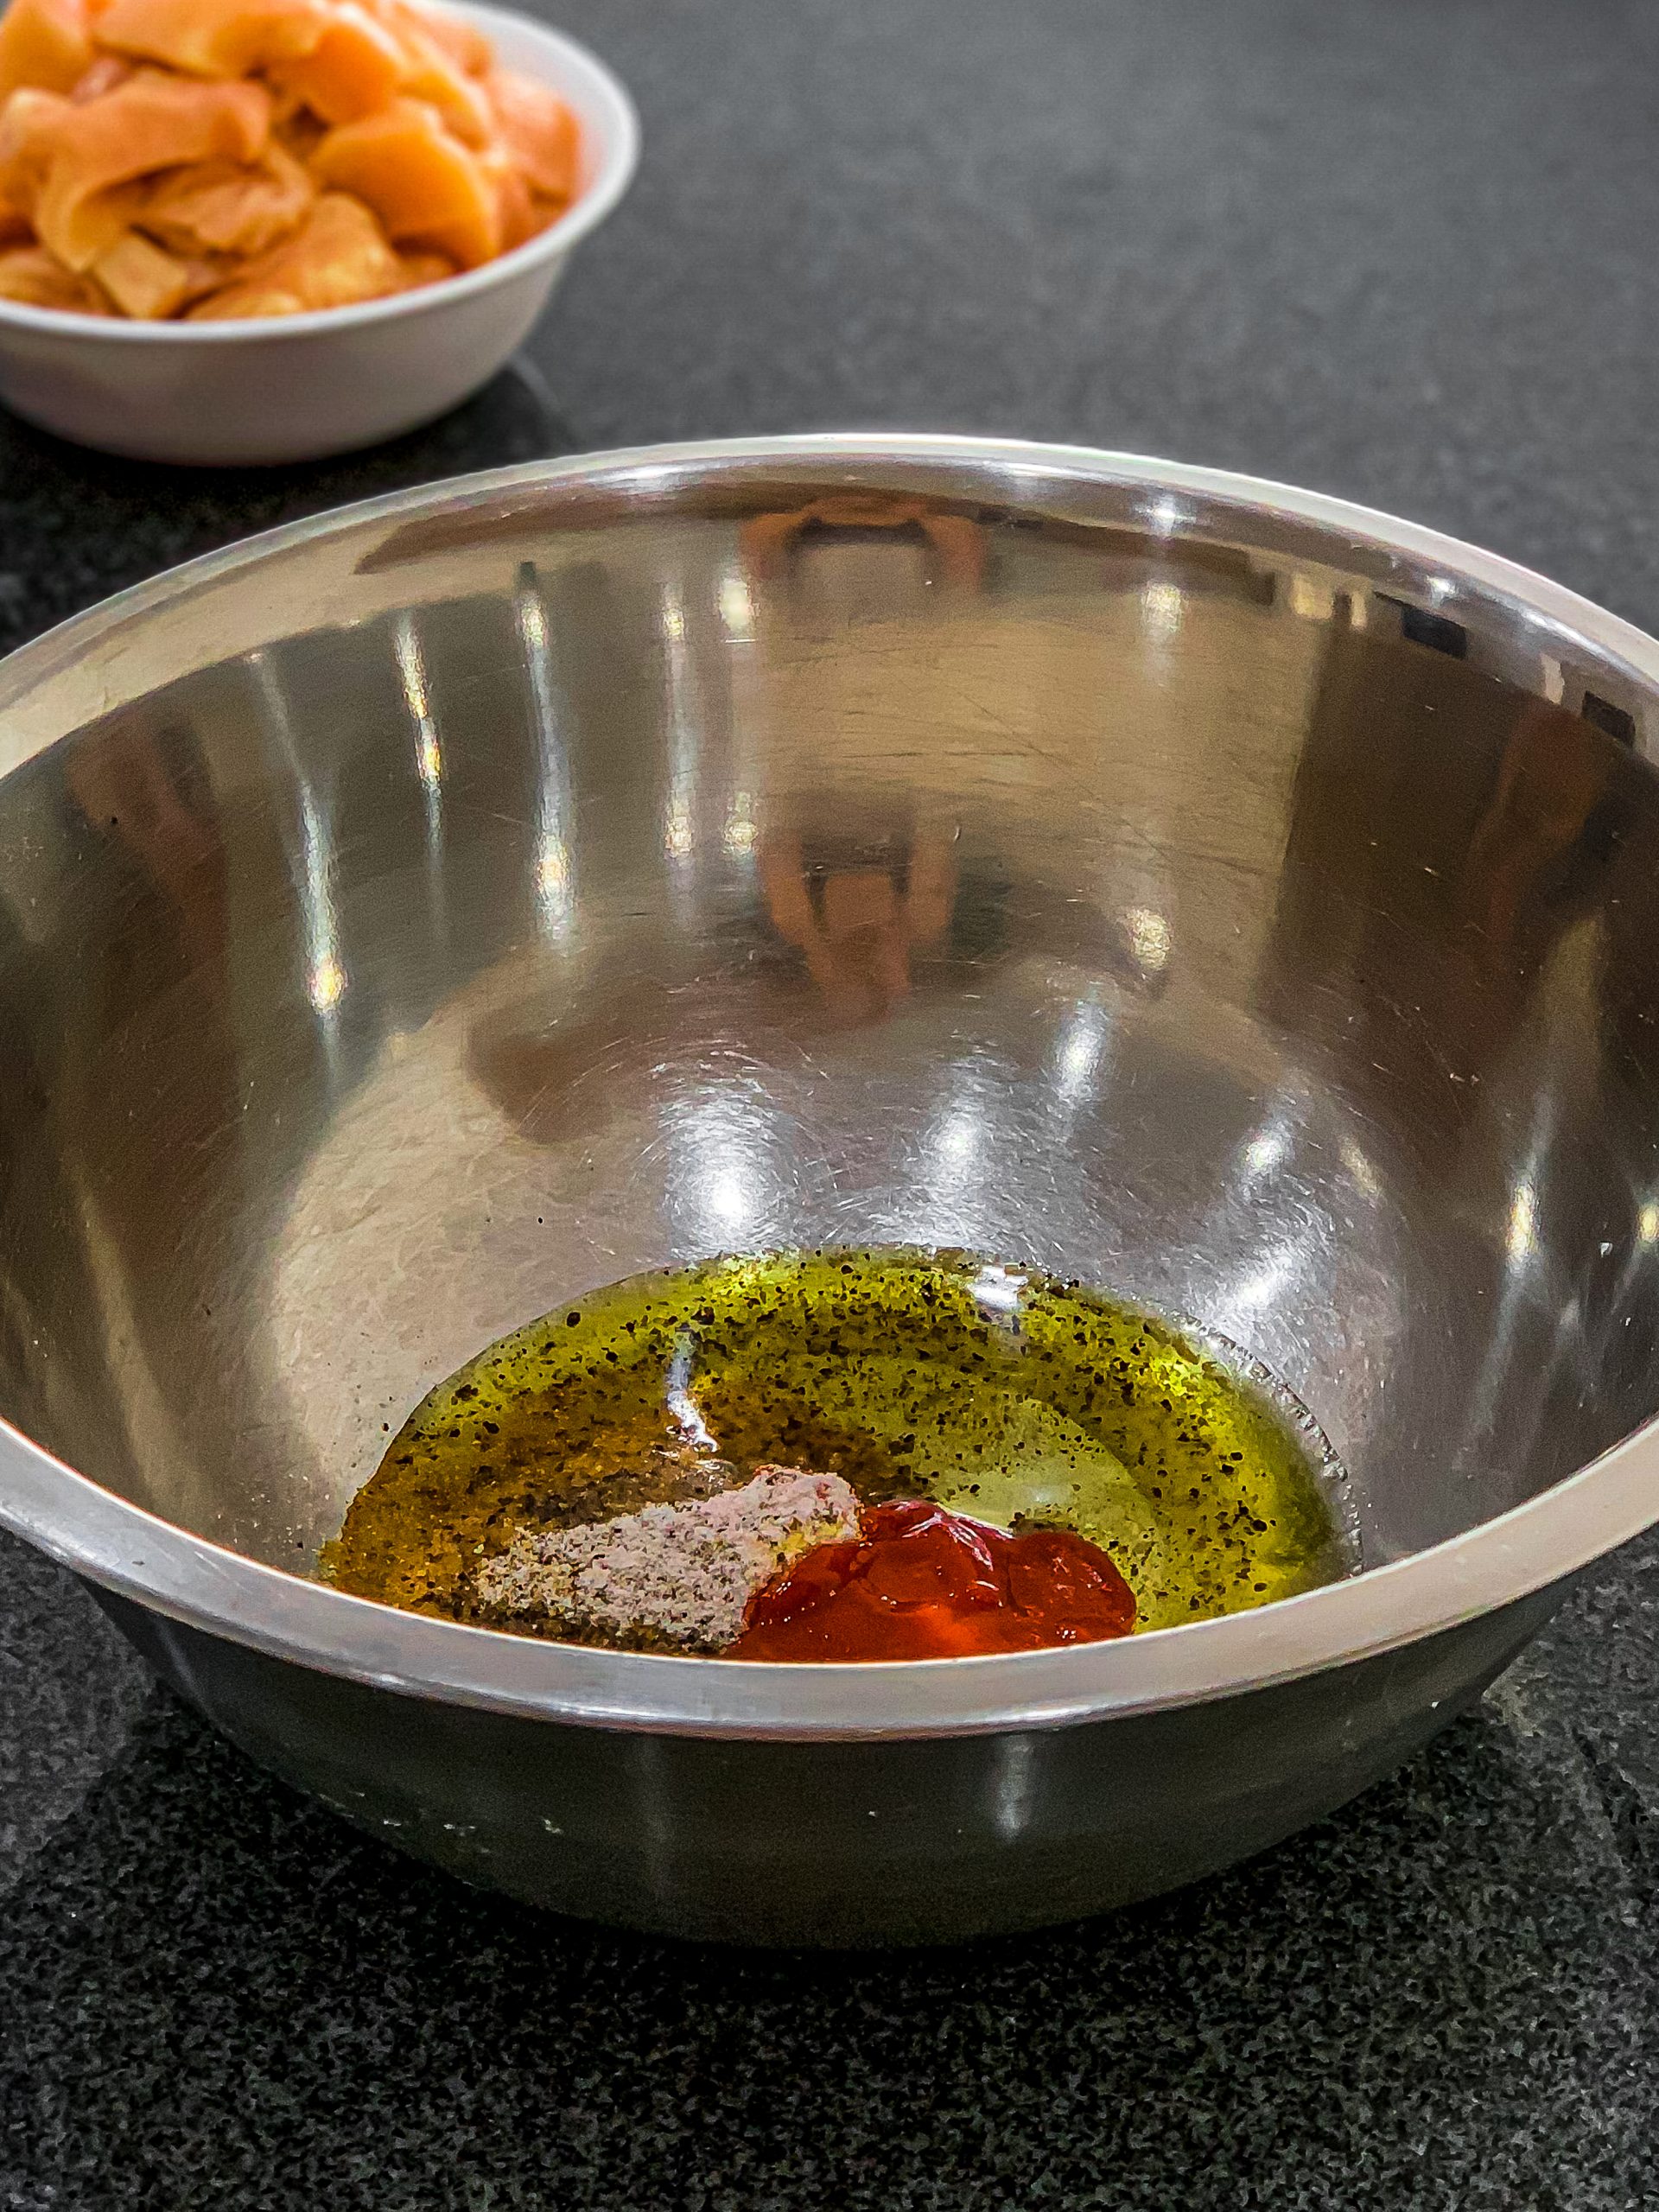 In a large bowl, mix together paprika, salt, pepper, garlic powder, olive oil, and hot sauce.